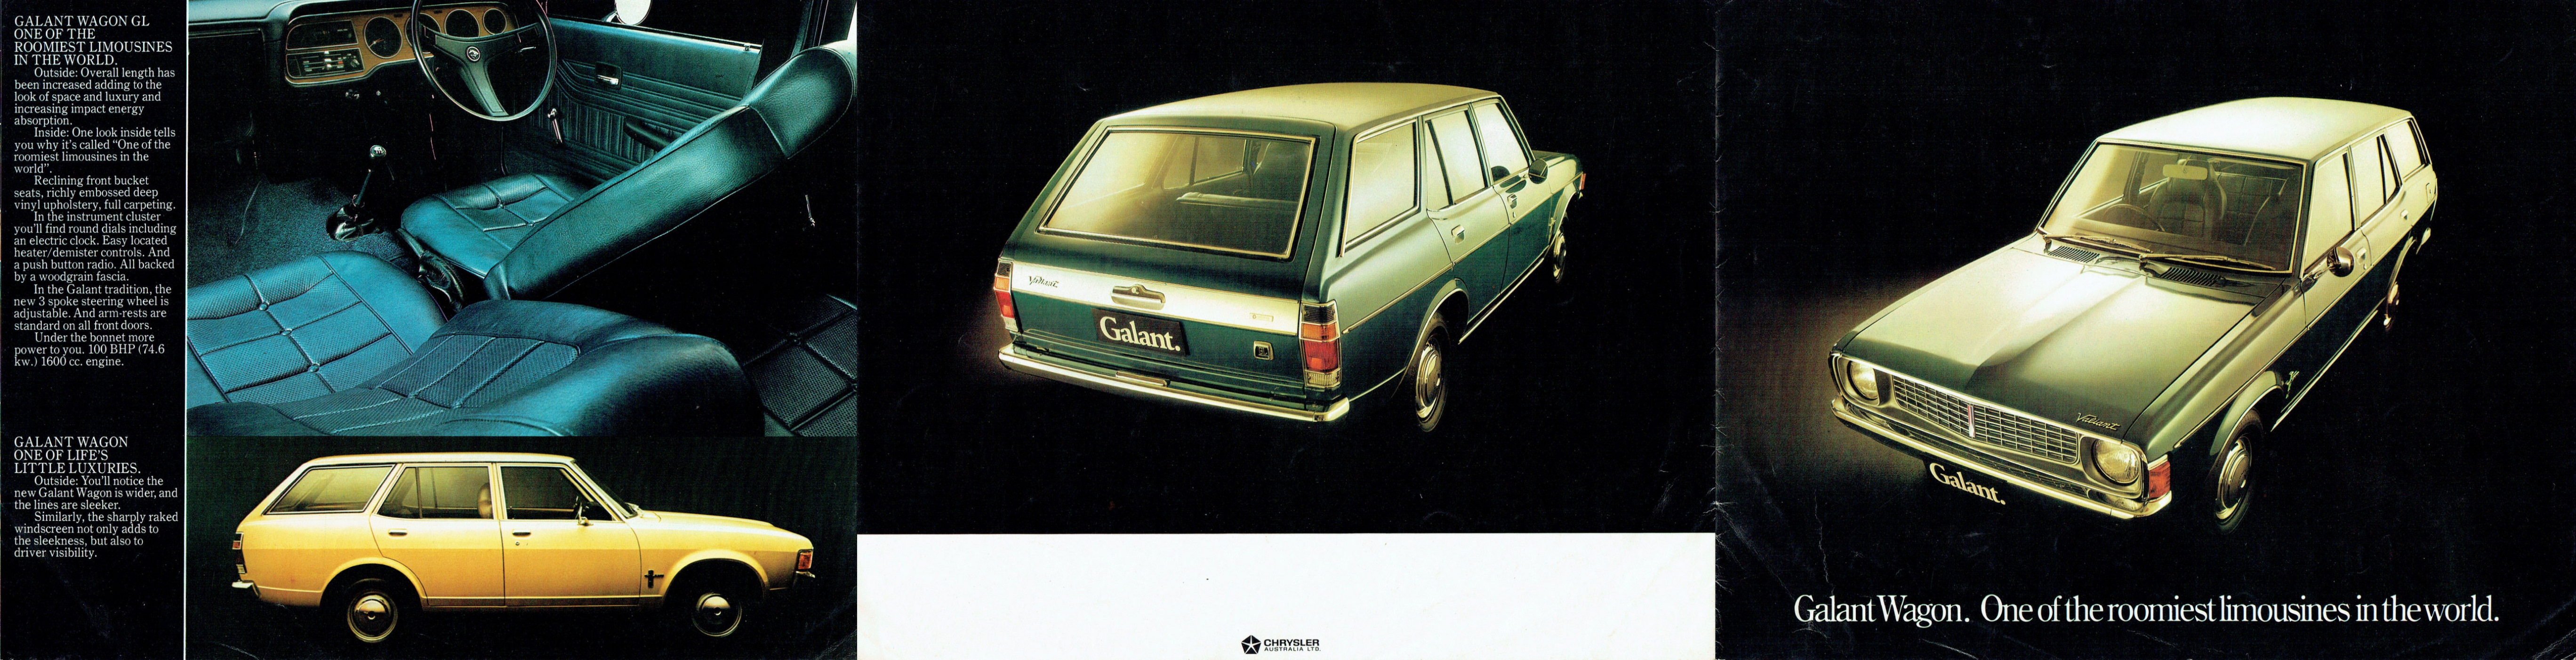 1974_Chrysler_GC_Galant_Wagon-Side_A